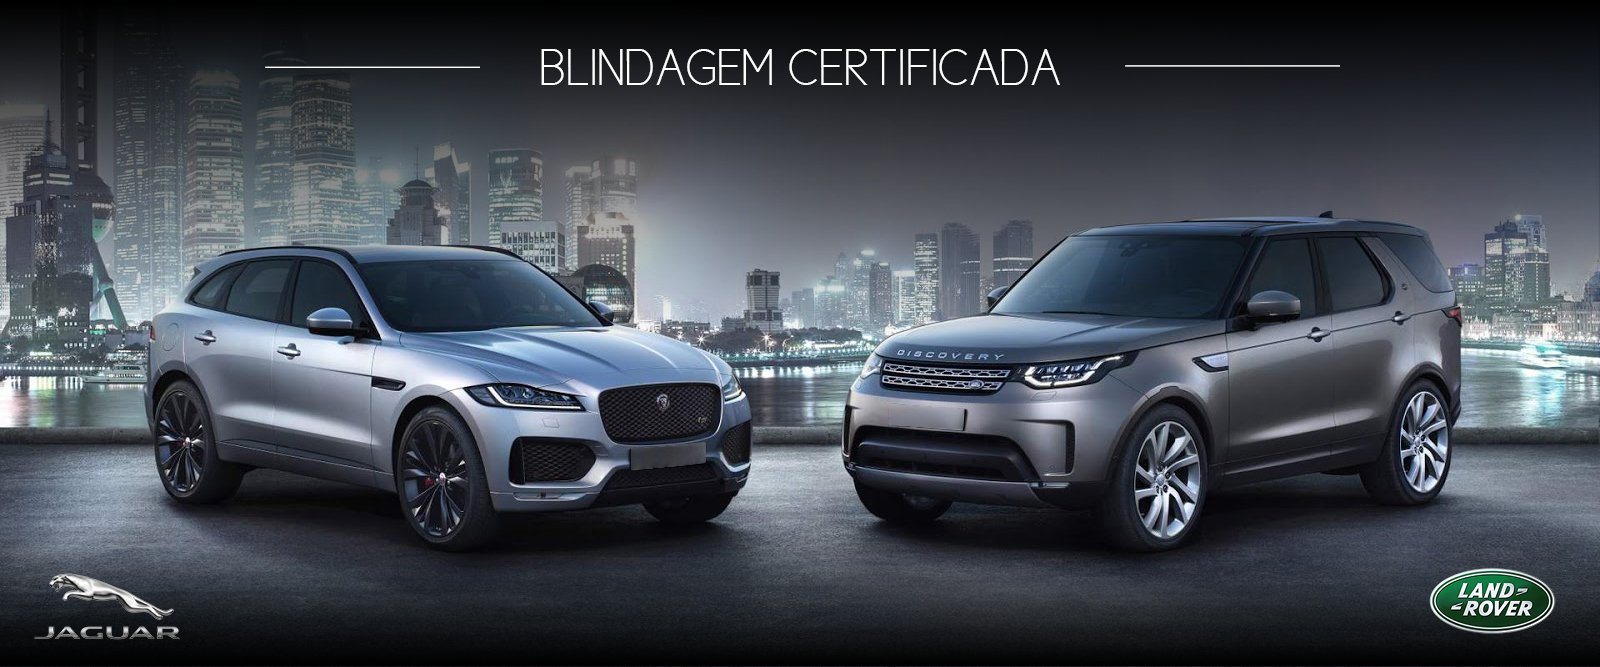 Jaguar Land Rover Blindagem Certificada